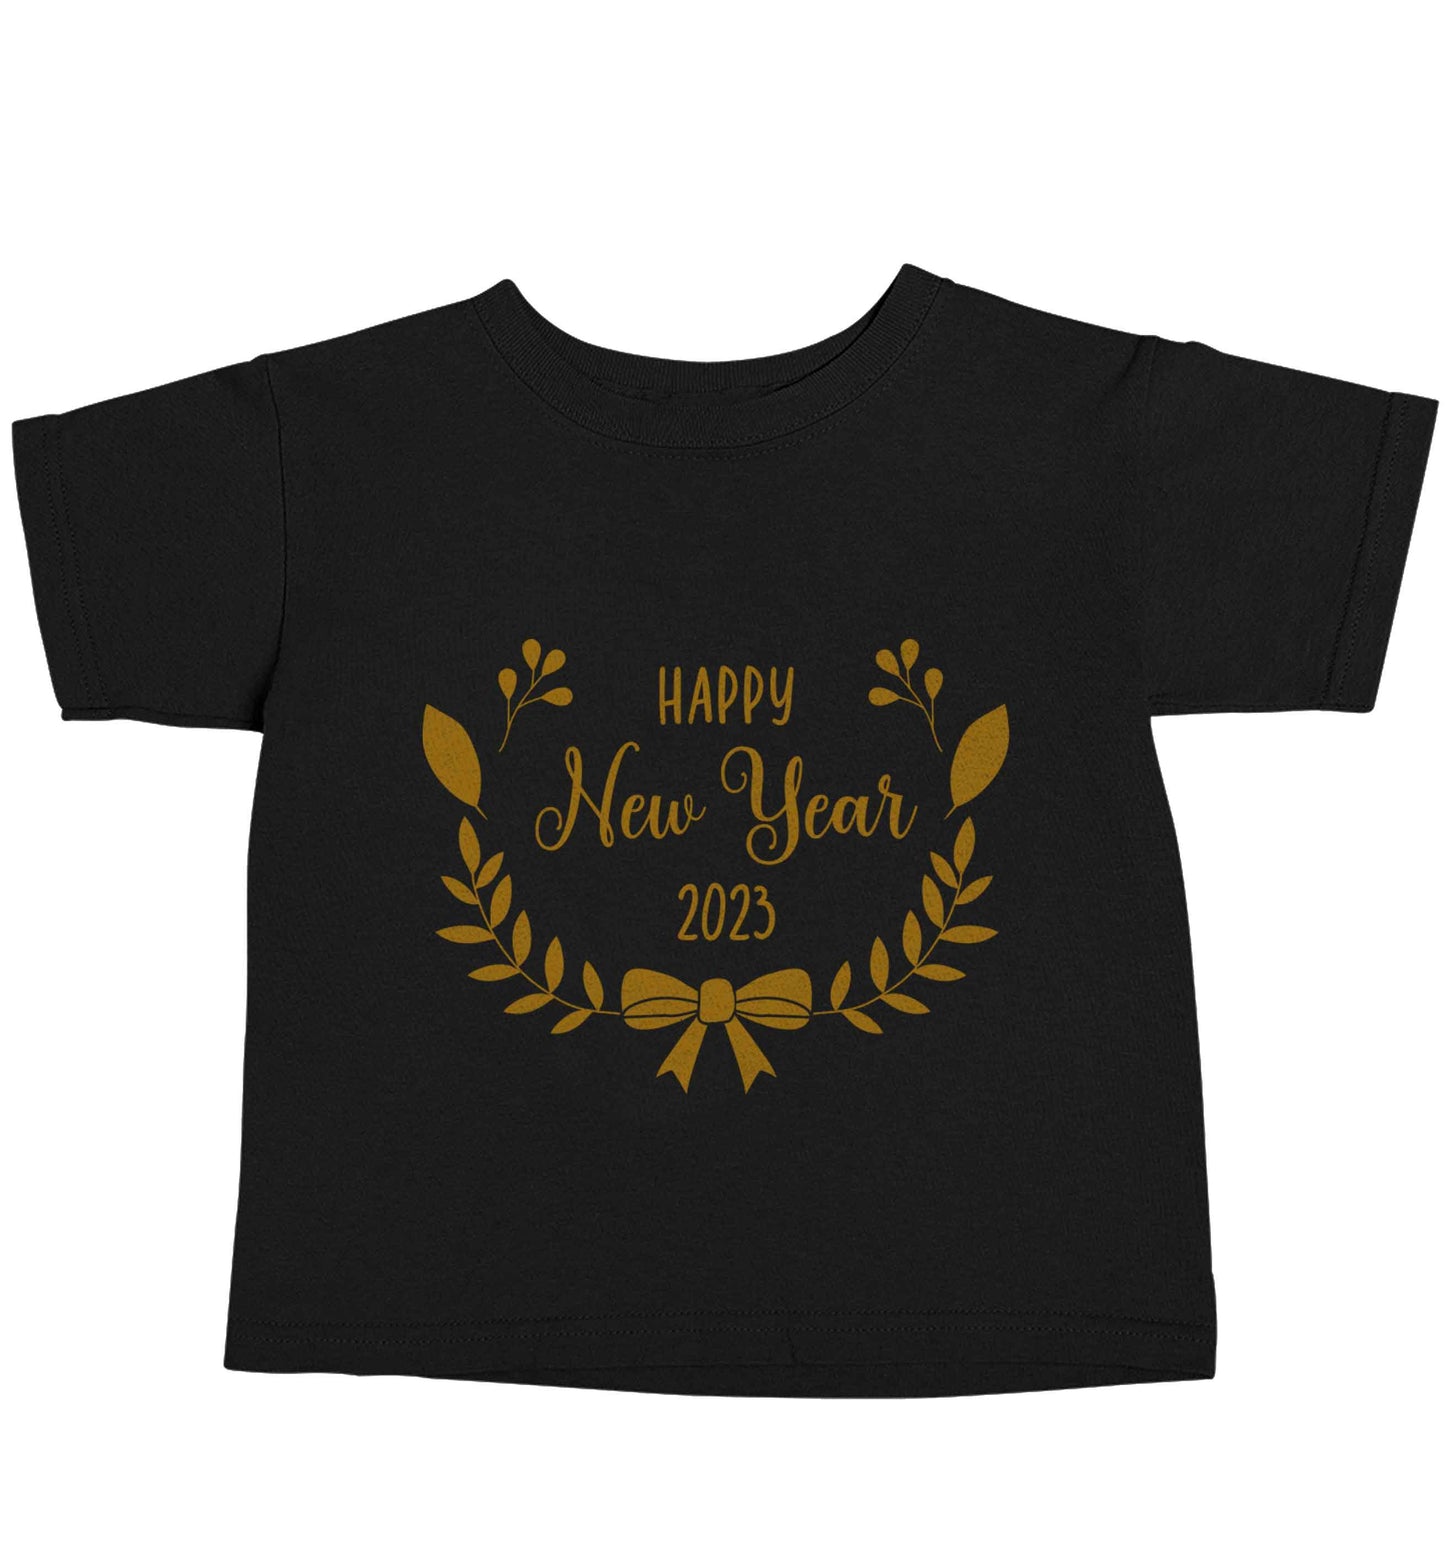 Happy New Year 2023 Black baby toddler Tshirt 2 years